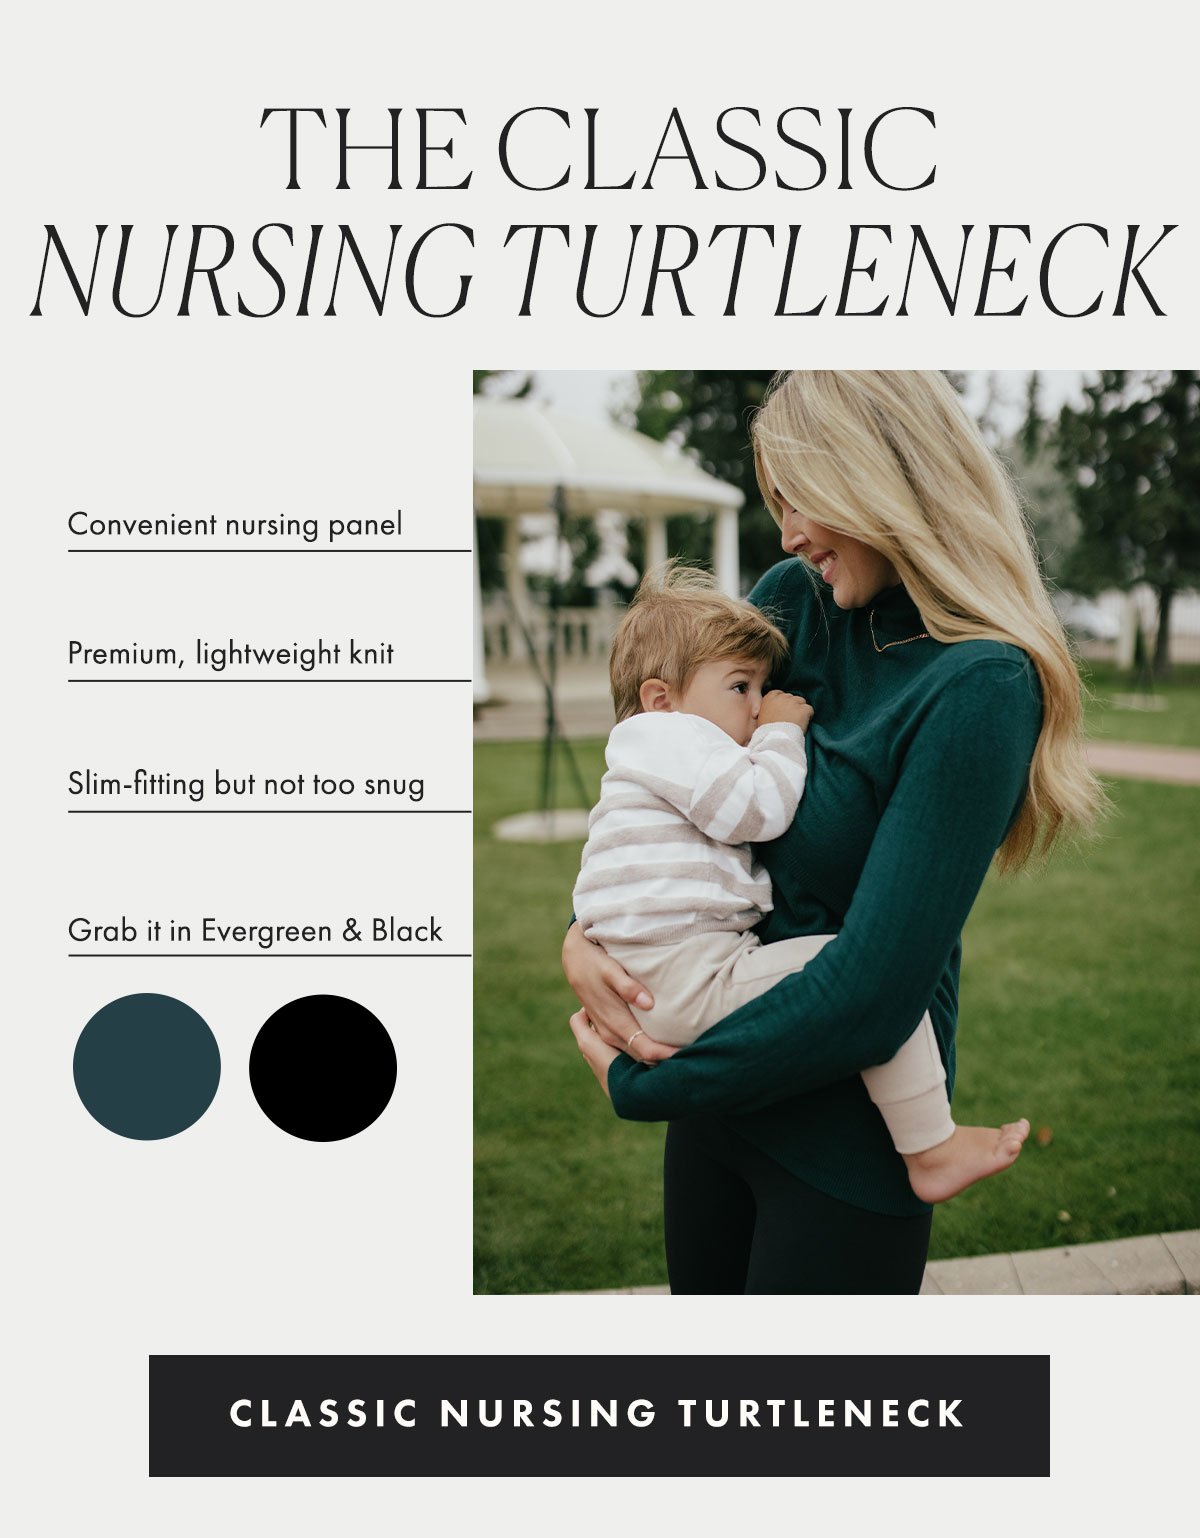 The Classic Nursing Turtleneck